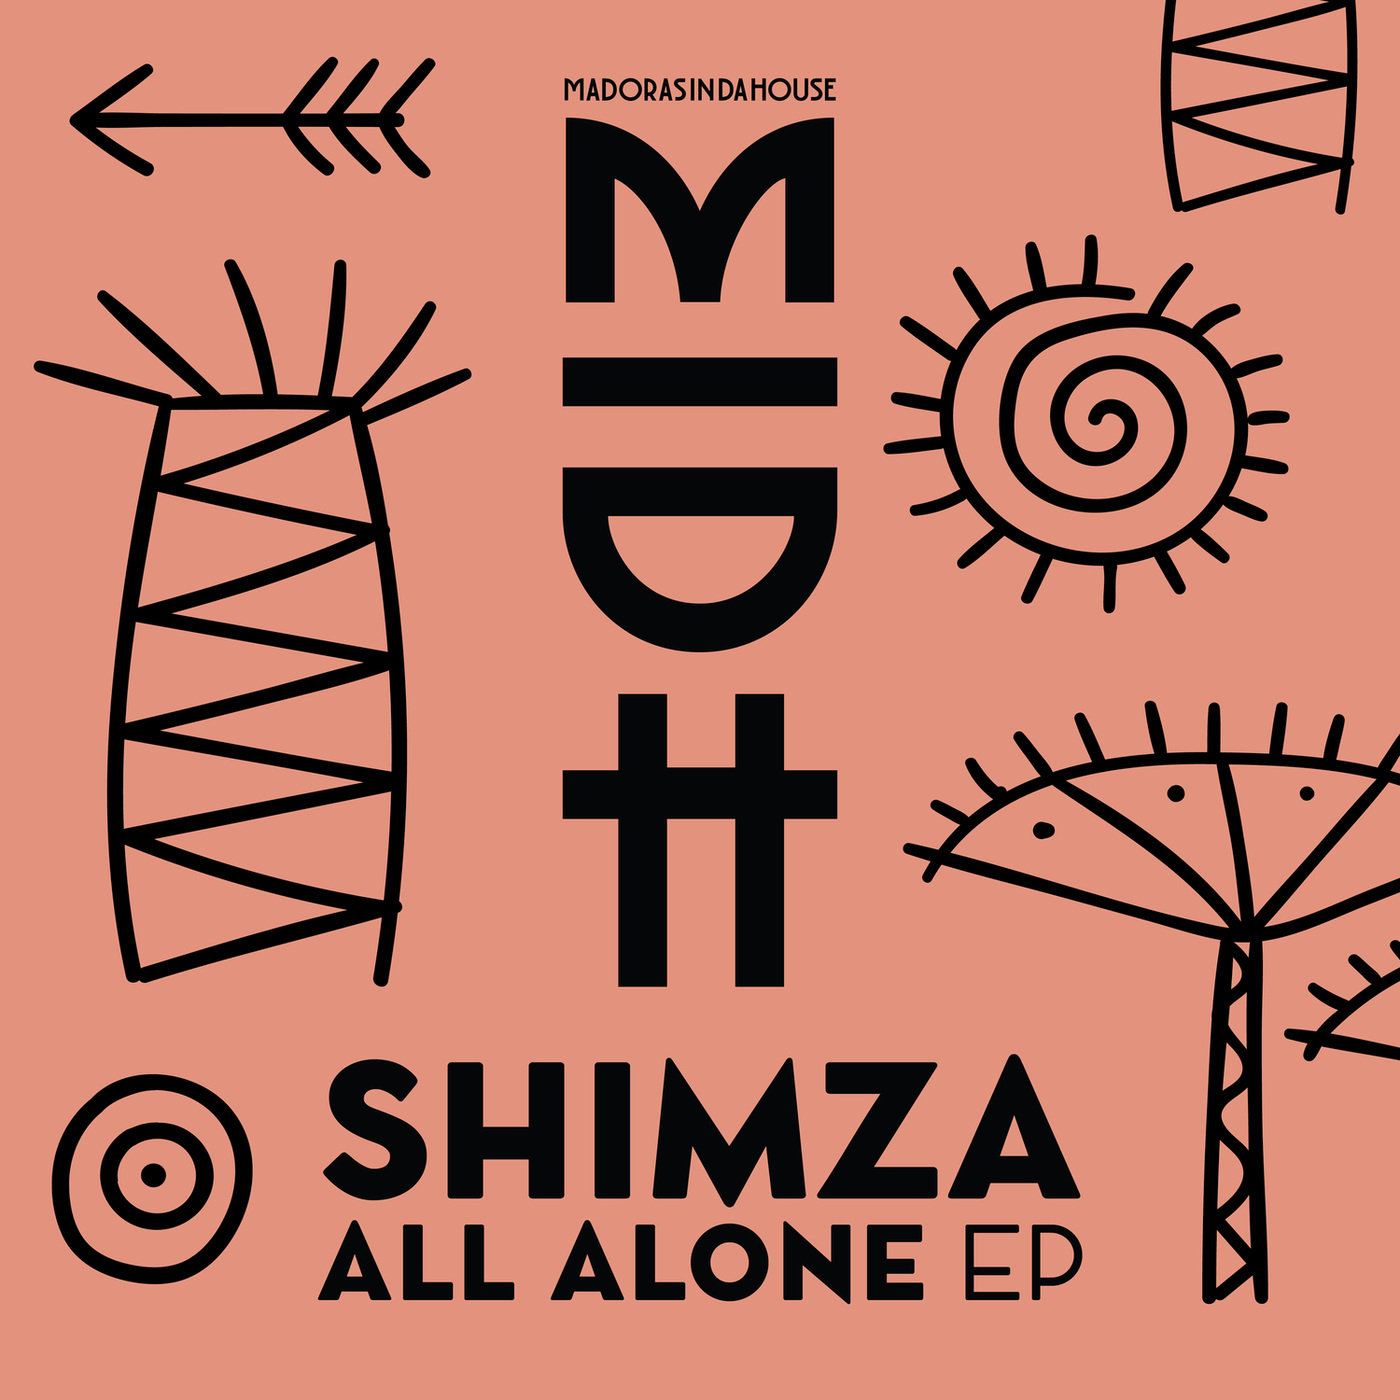 Shimza - All Alone / Madorasindahouse Records